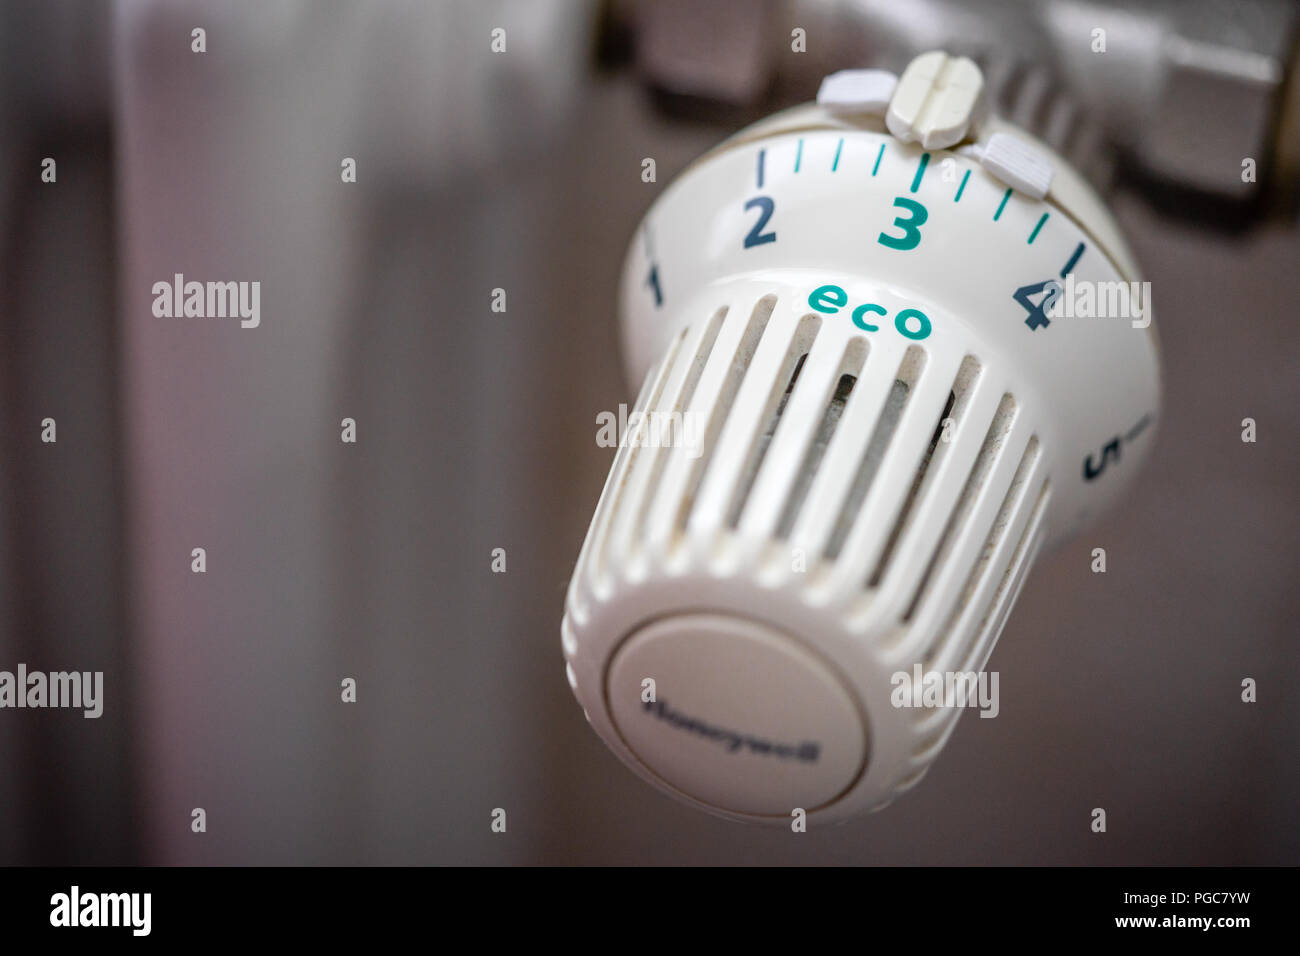 Radiator thermostat valve temperature dial set on energy efficient green eco setting Stock Photo